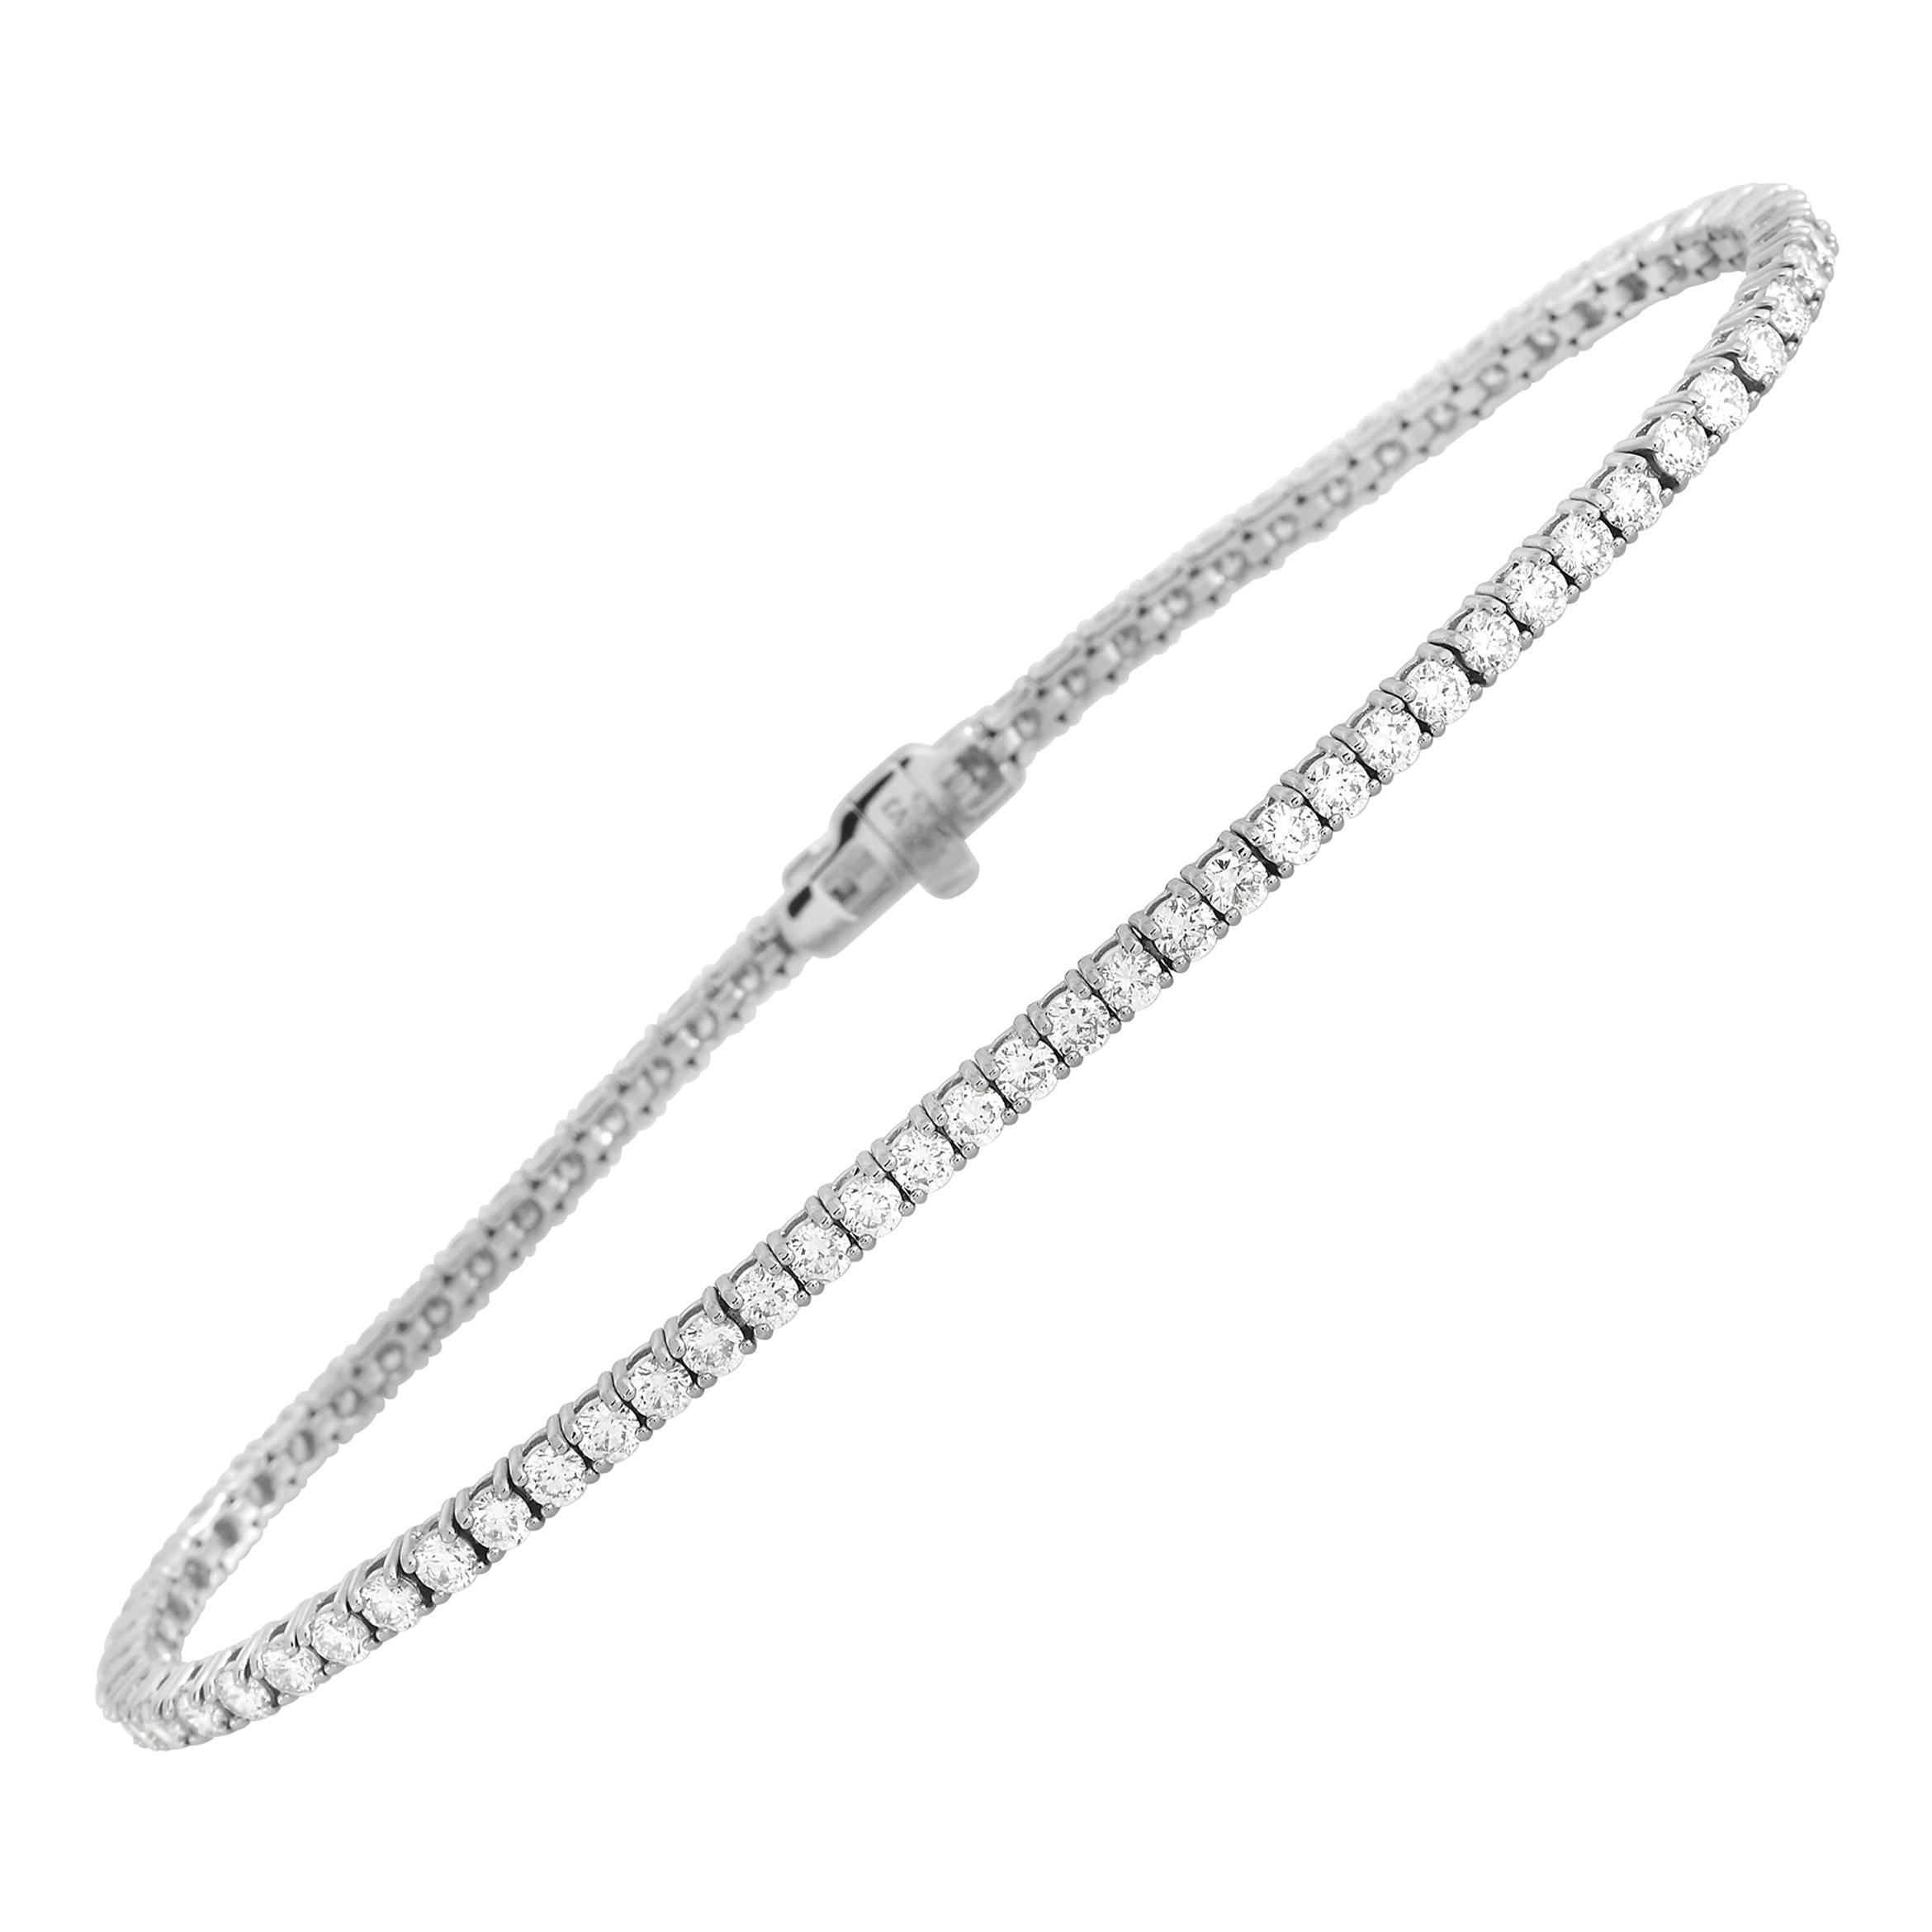 LB Exclusive 14k White Gold 3.31 Ct Diamond Tennis Bracelet